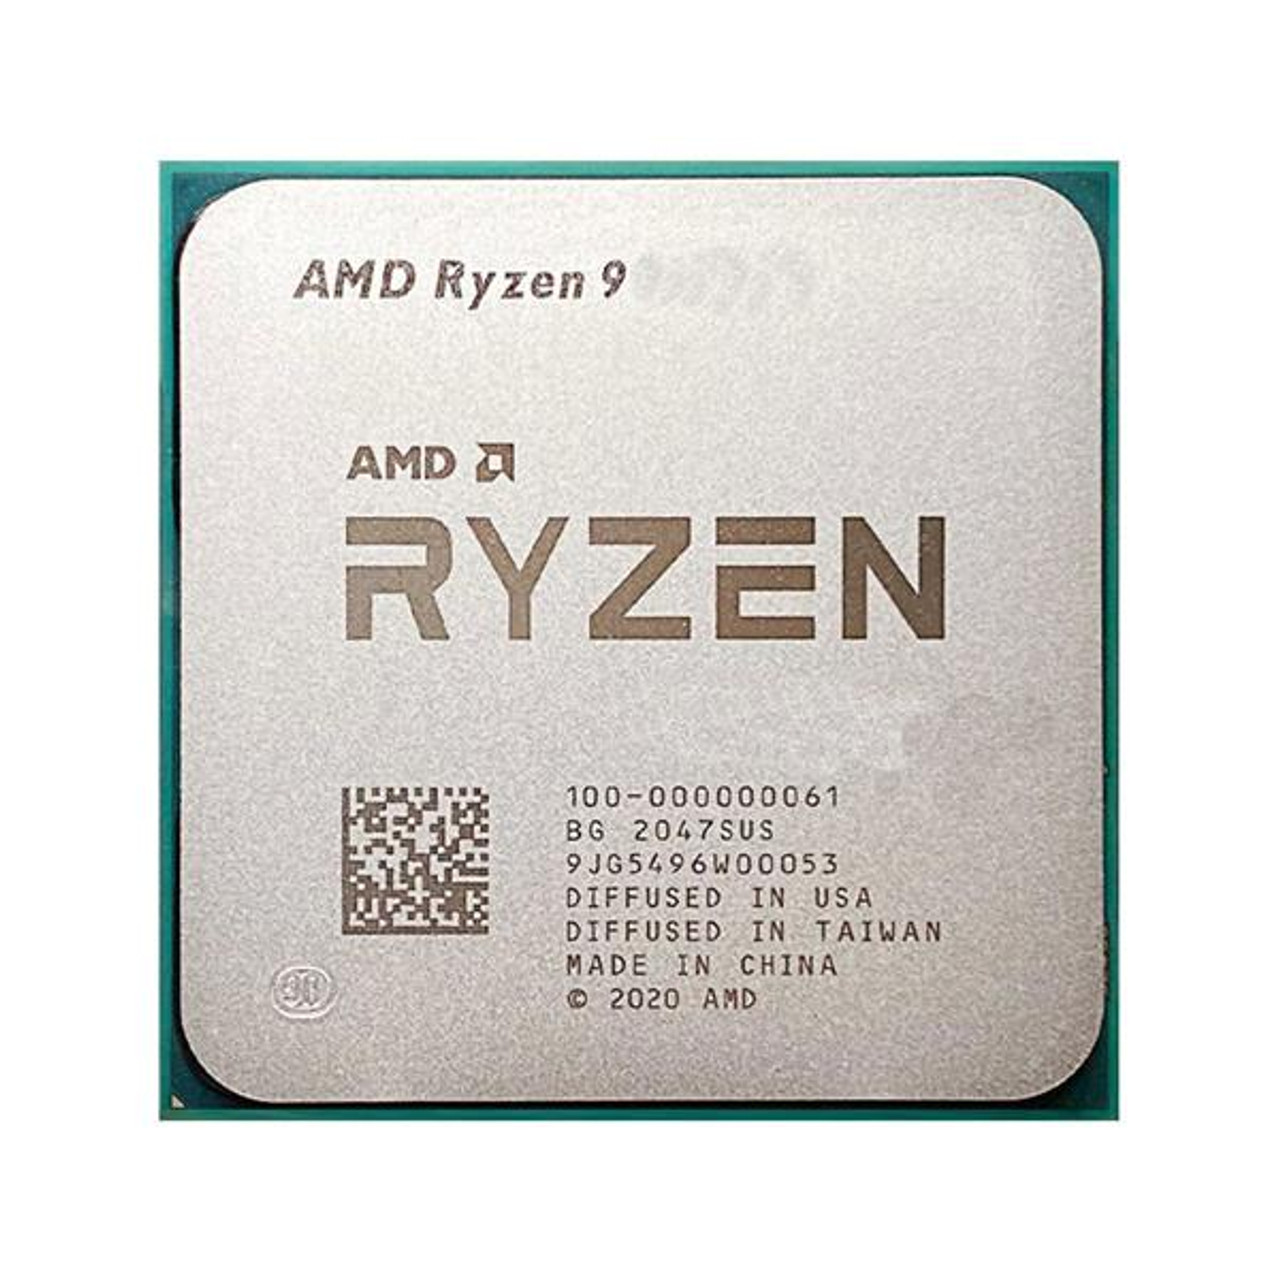 AMD Ryzen 9 Series 12-Core 3.70GHz 64MB L3 Cache Socket AM4 Processor